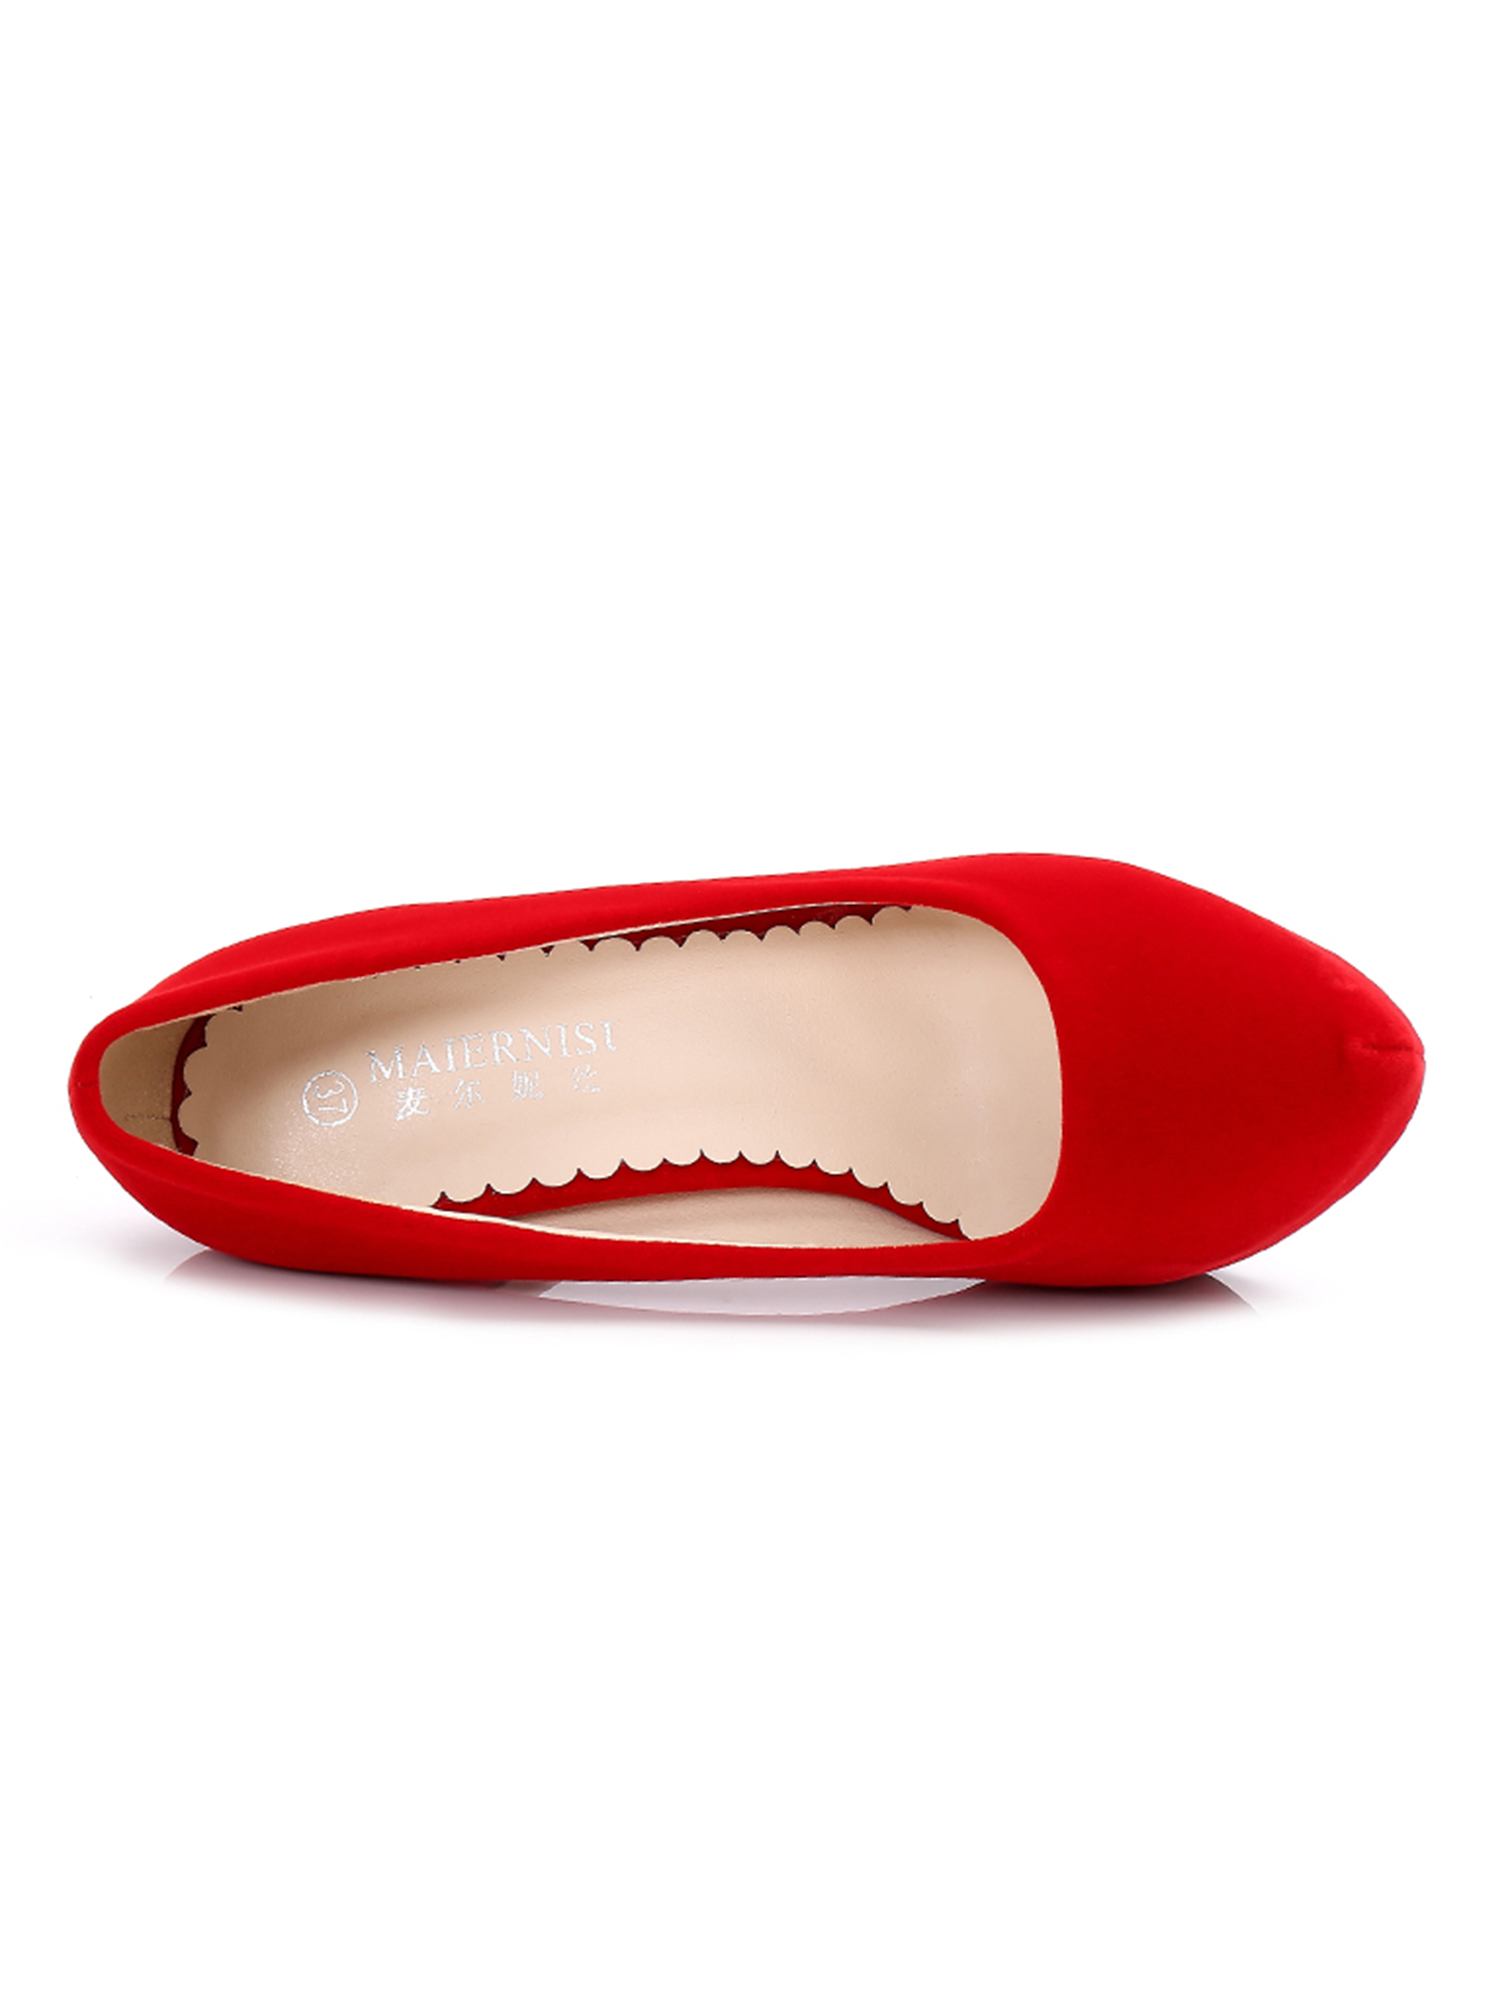 Daeful Women Lightweight High Heel Platform Pump Wedding Stiletto Heels Walking Fashion Dress Shoes Red (14cm) 11 - image 4 of 9